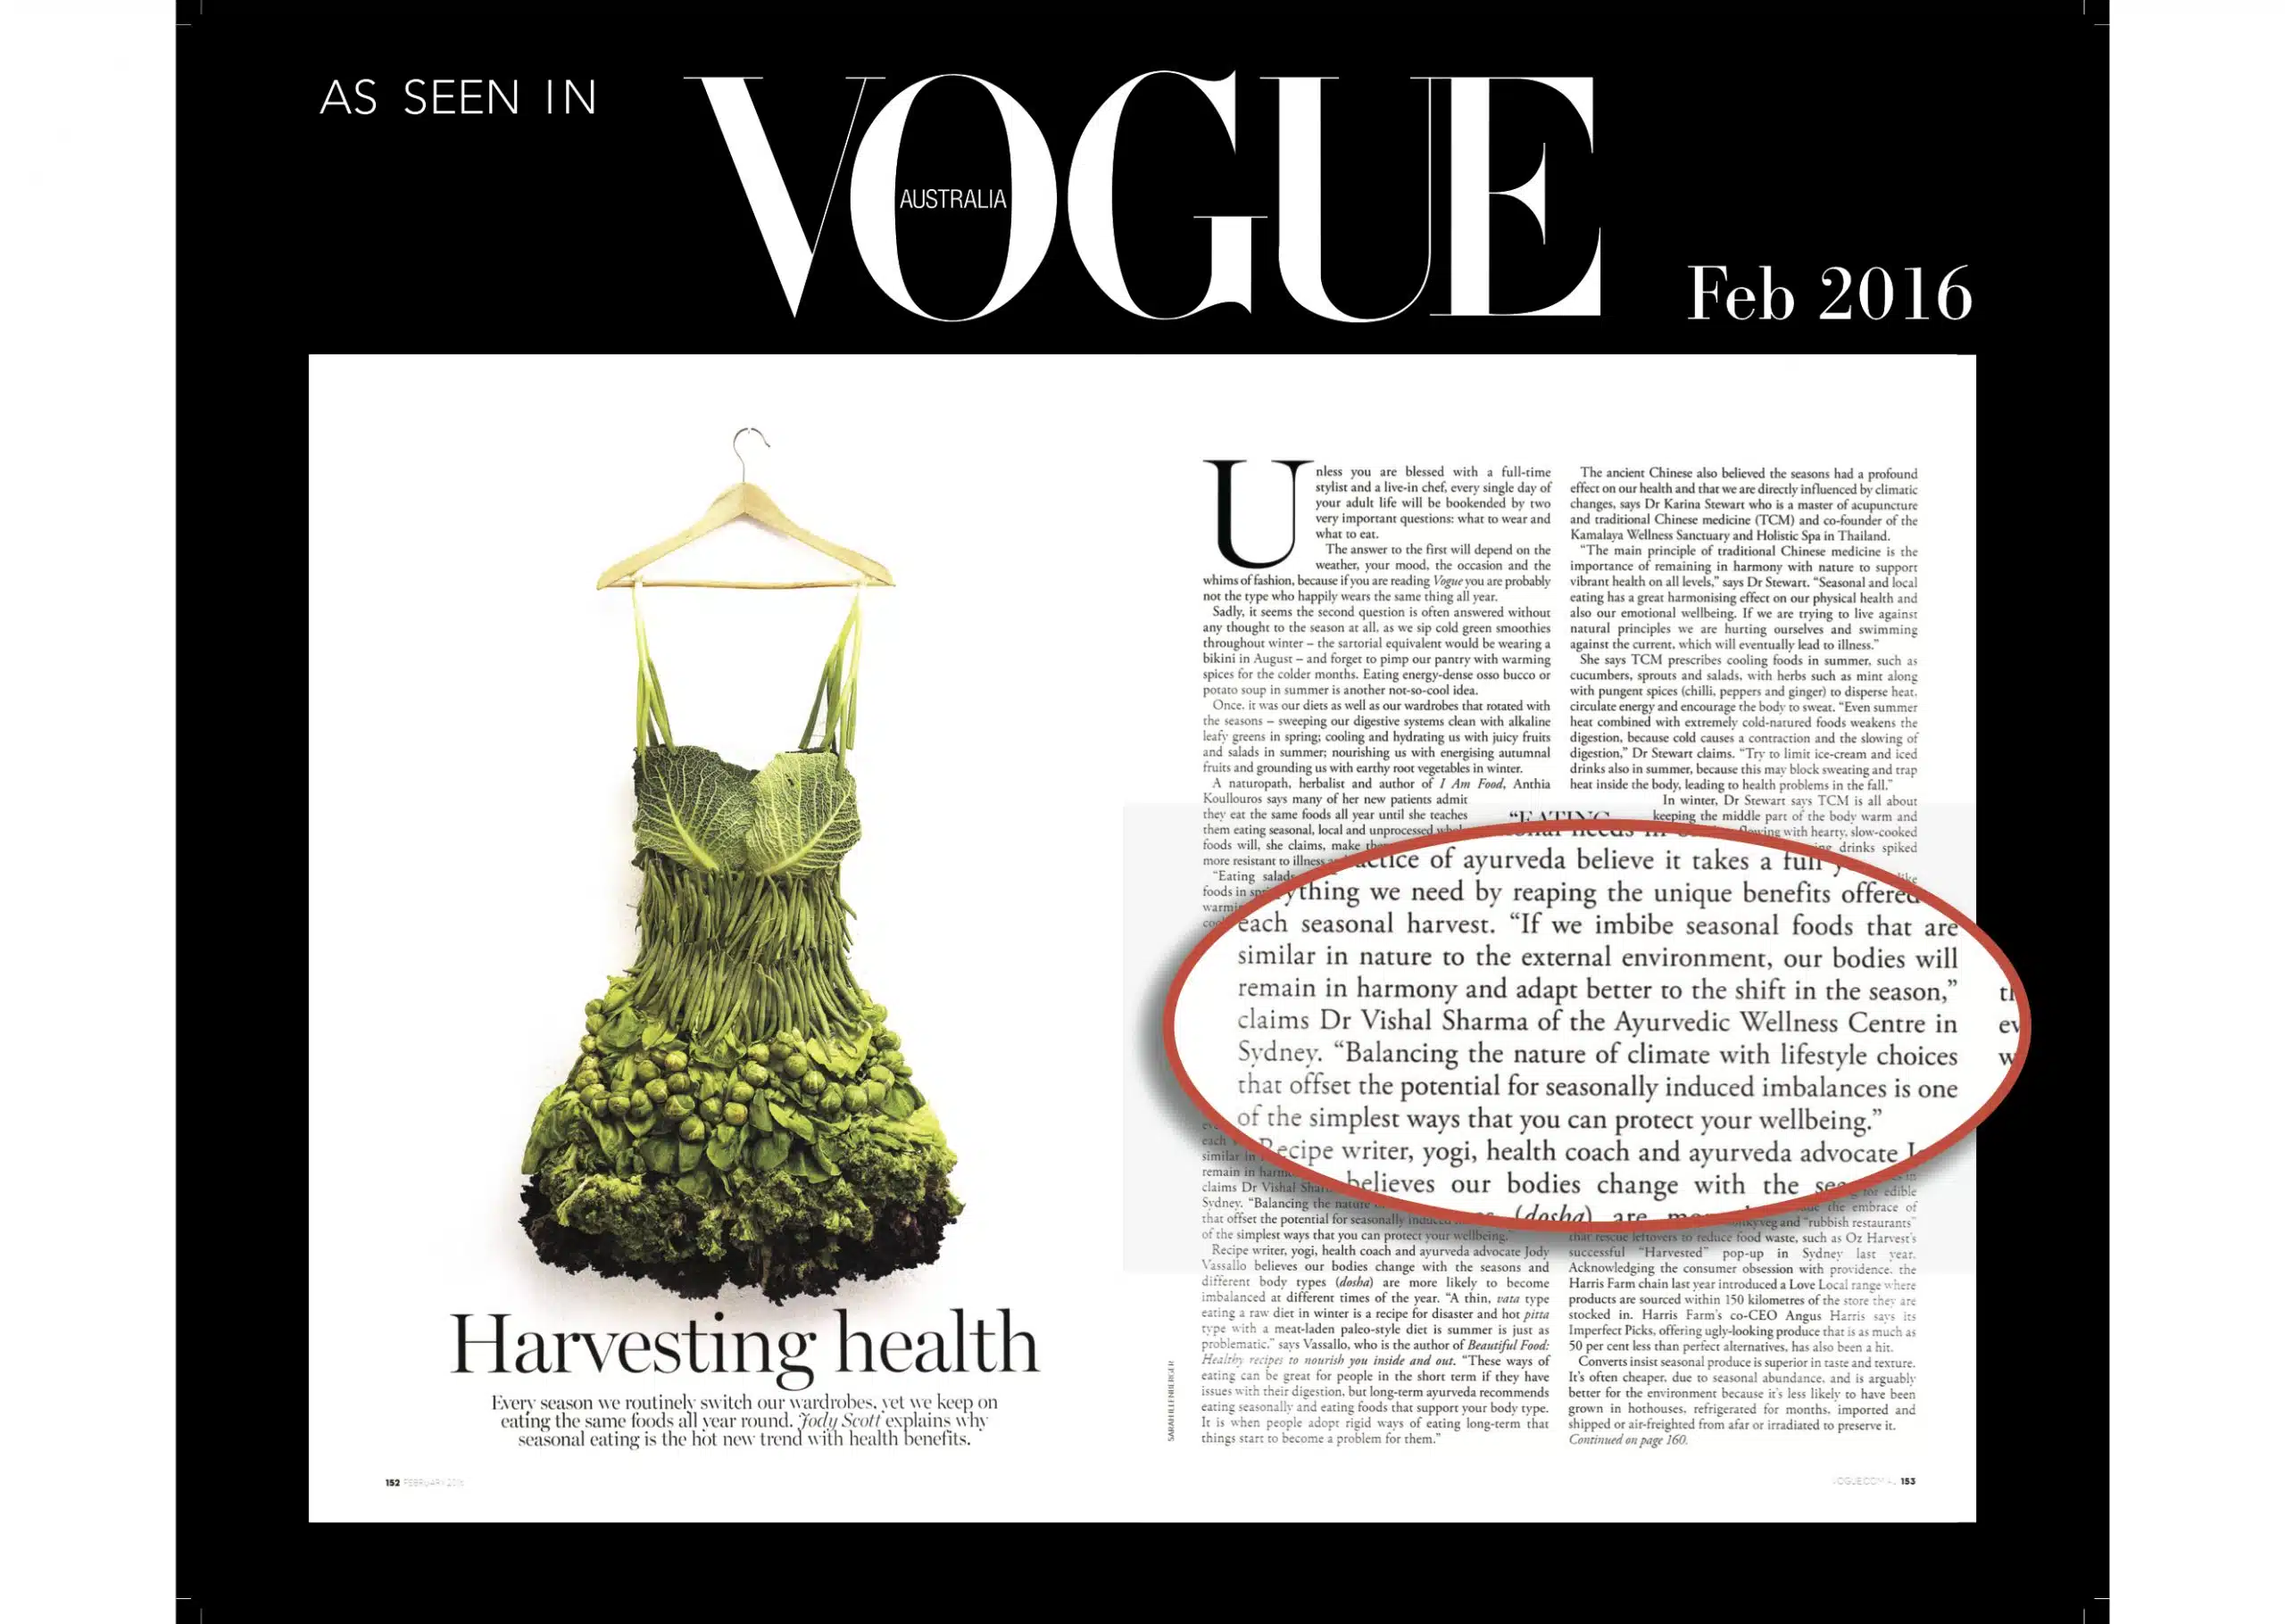 Ayurvedic wellness centre in Vogue magazines